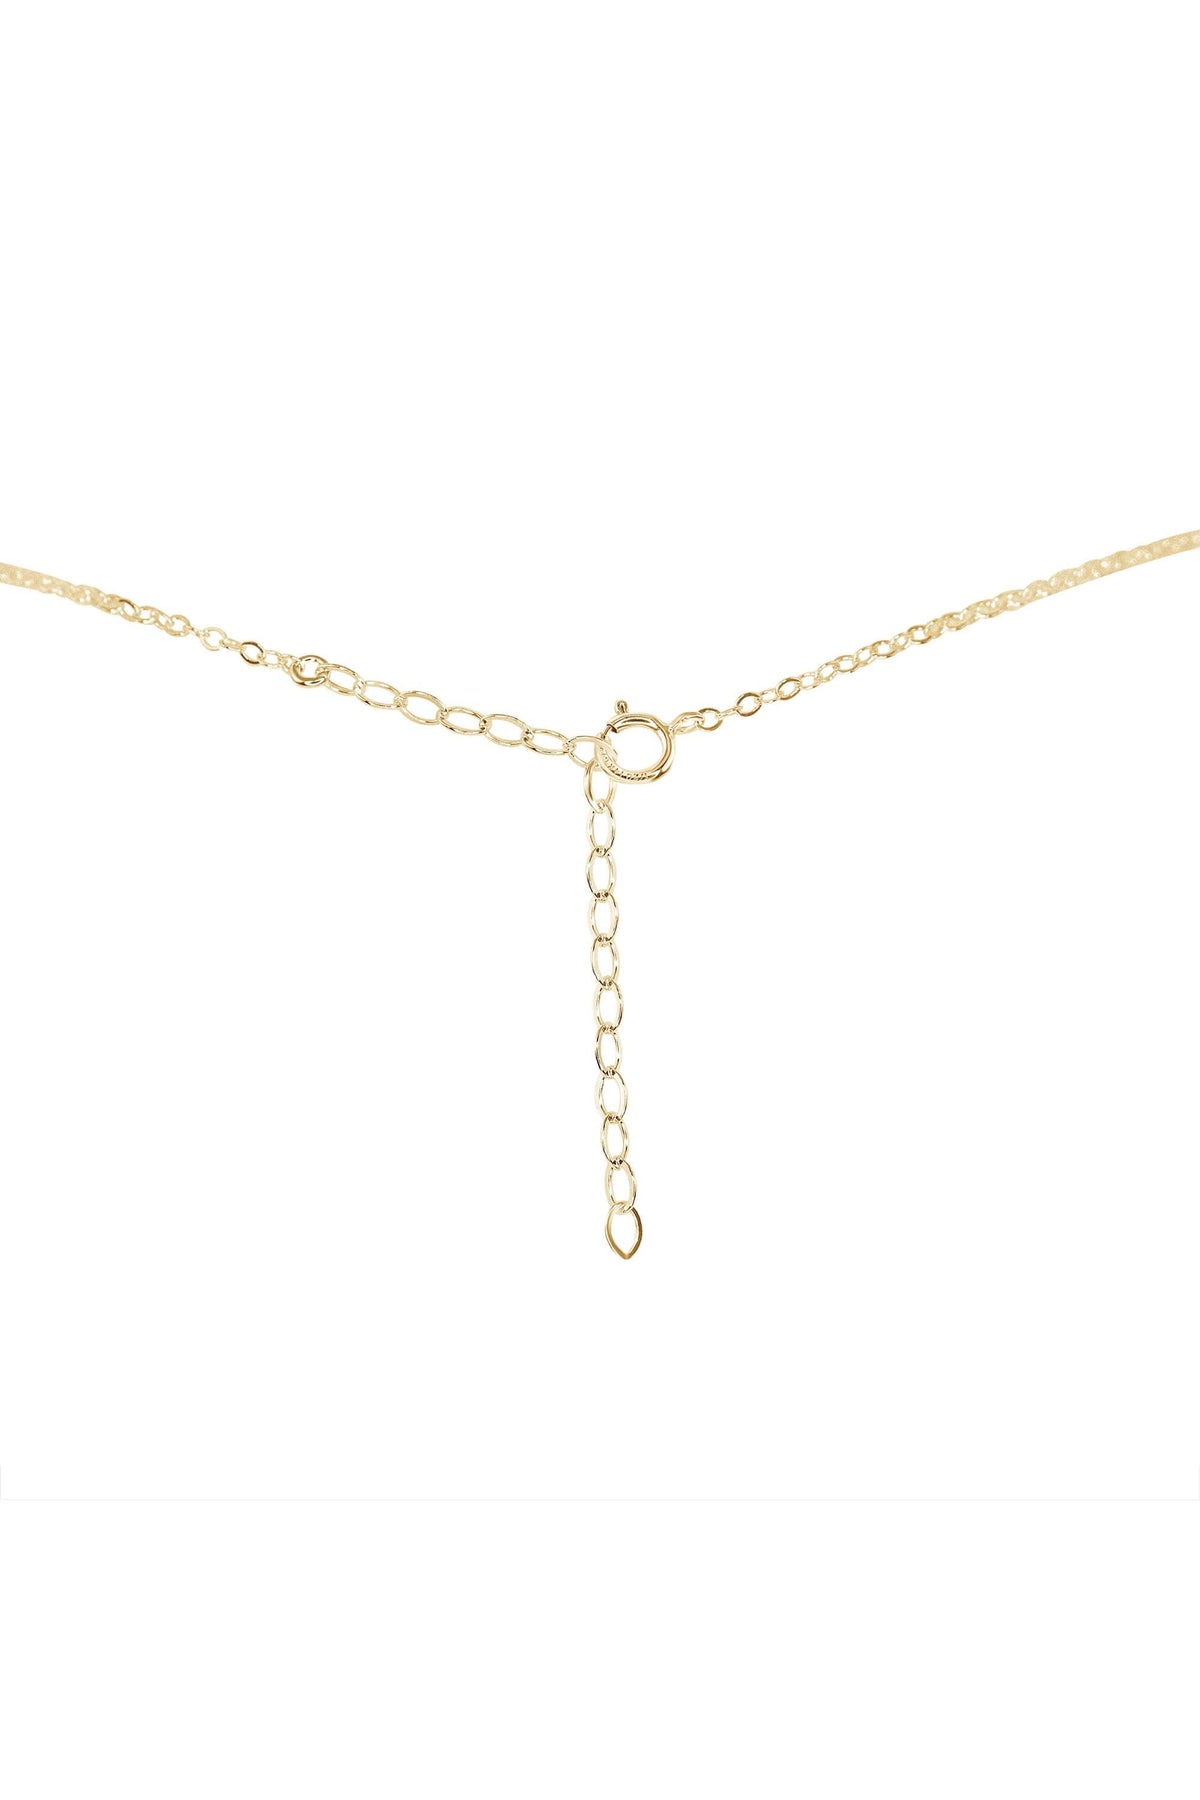 Raw Crystal Pendant Choker - Rainbow Moonstone - 14K Gold Fill - Luna Tide Handmade Jewellery